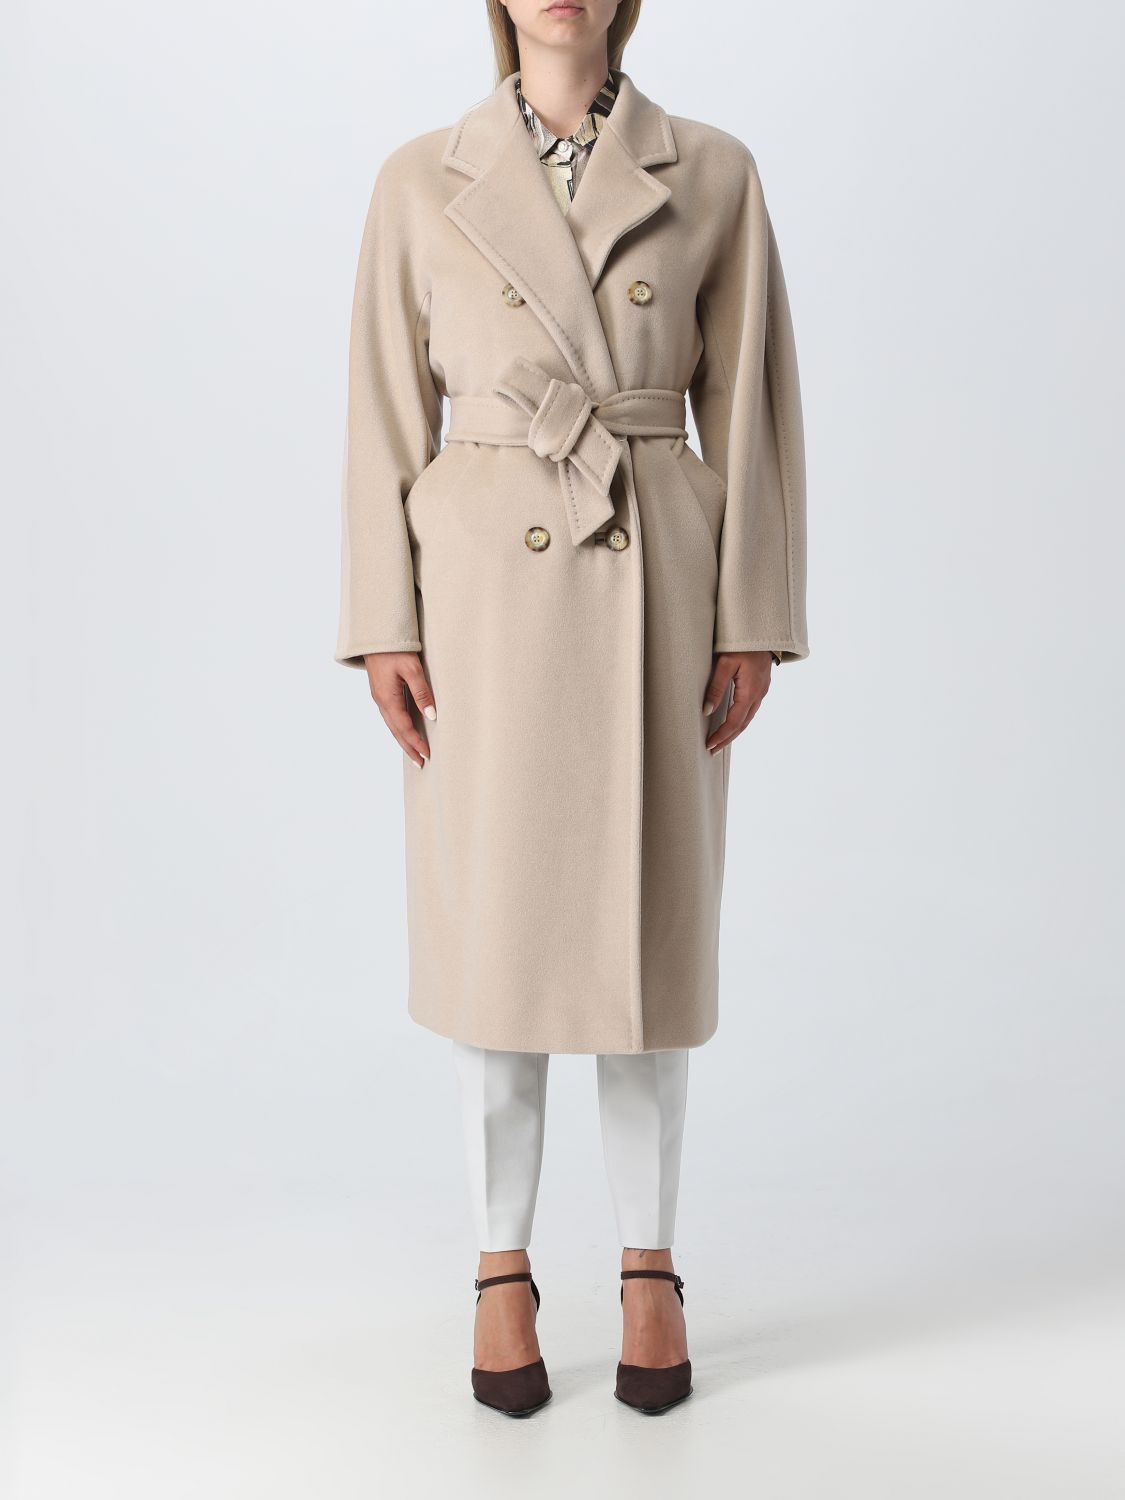 MAX MARA: Madame coat in wool blend - Beige | Max Mara coat ...